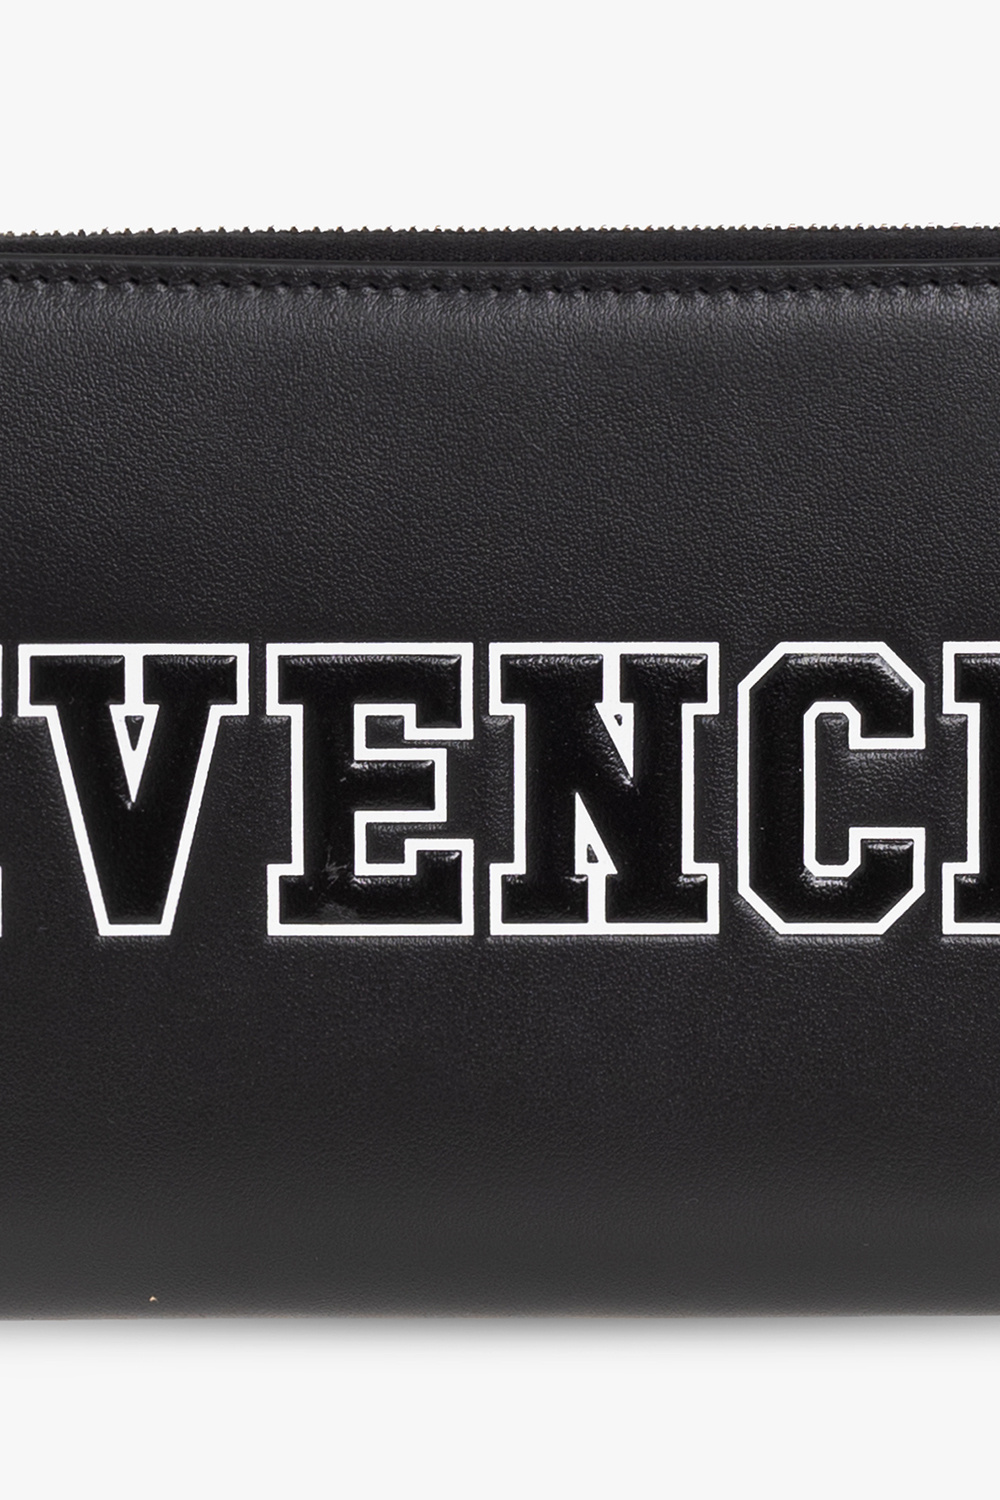 Givenchy givenchy 4g large scarf item